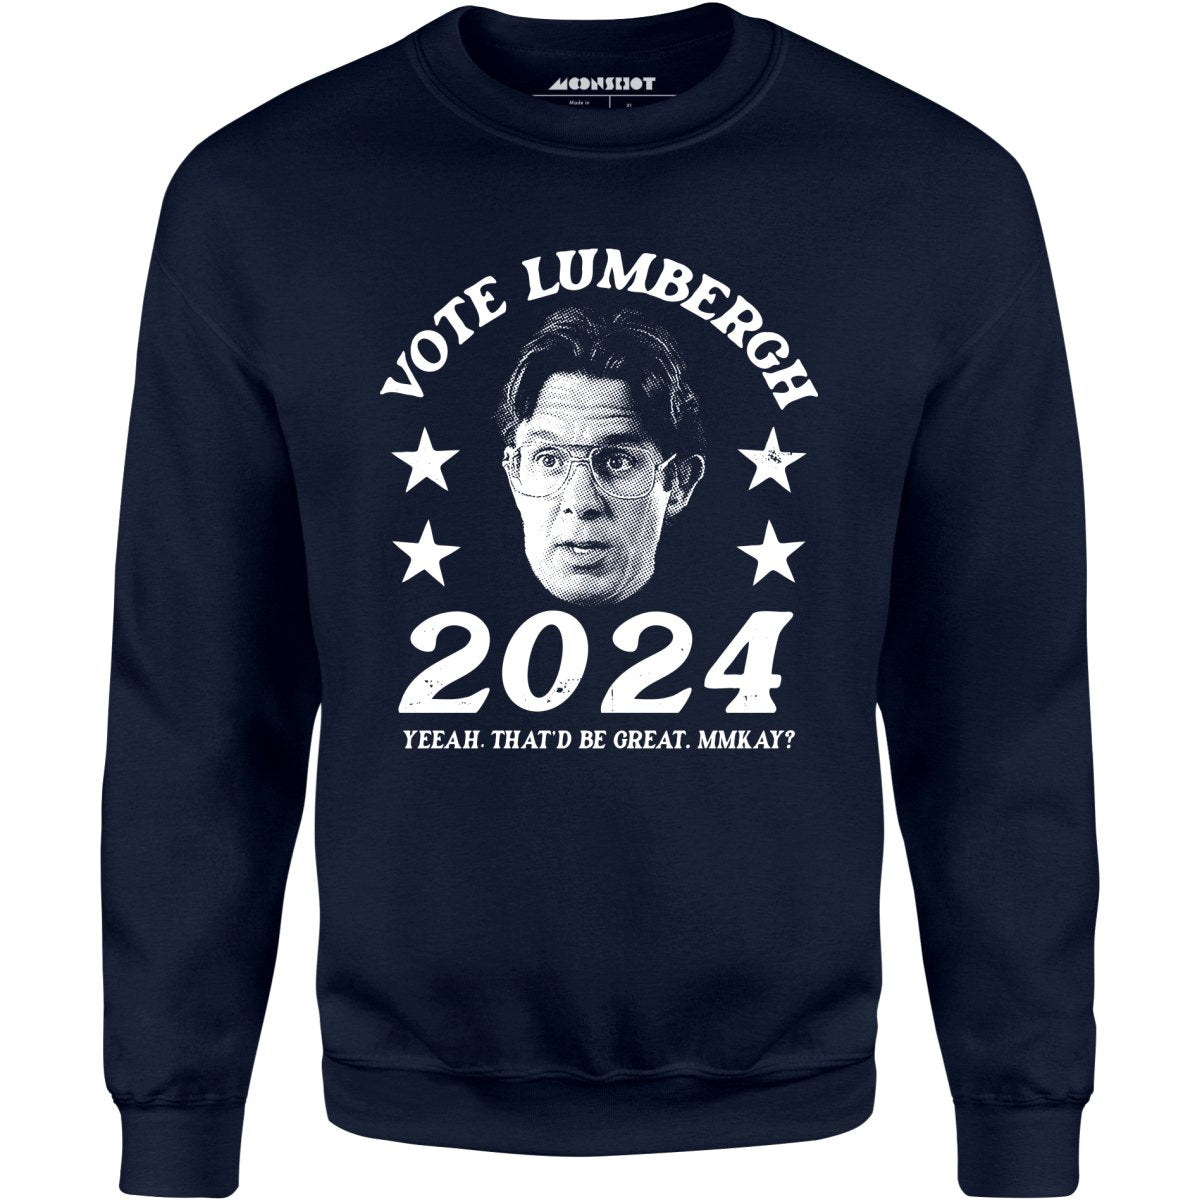 Bill Lumbergh 2024 - Unisex Sweatshirt